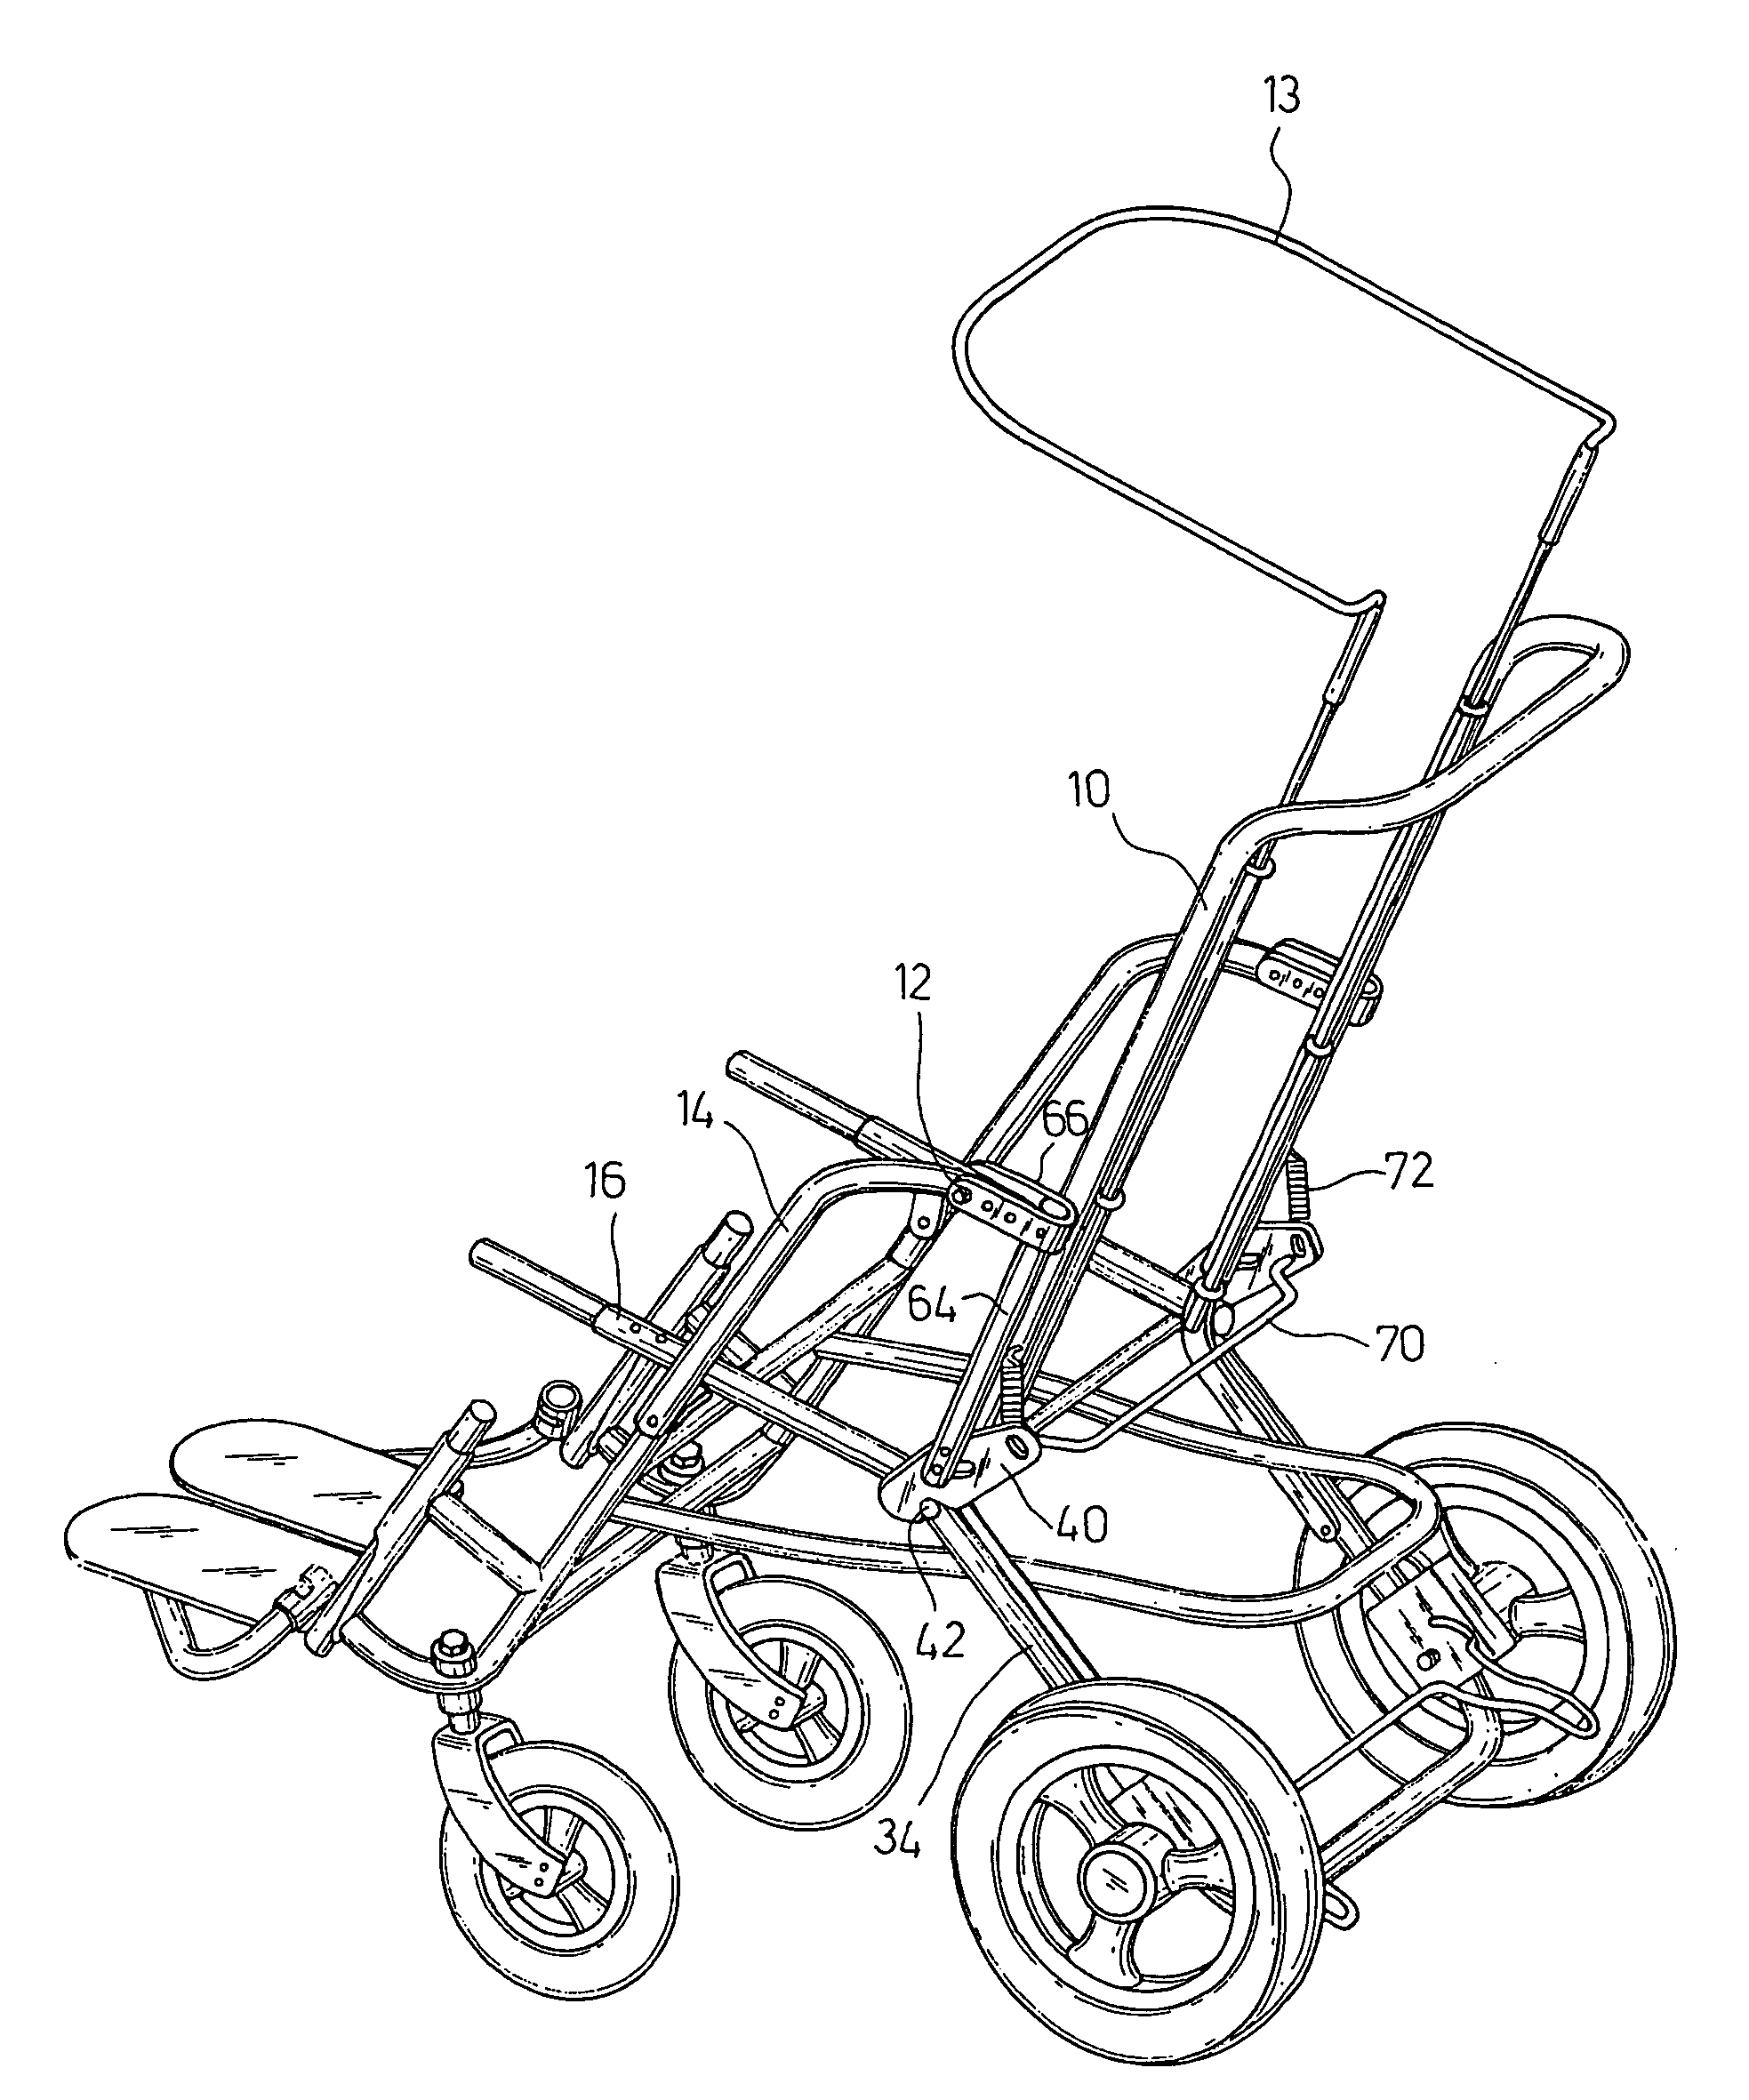 Rehabilitation stroller